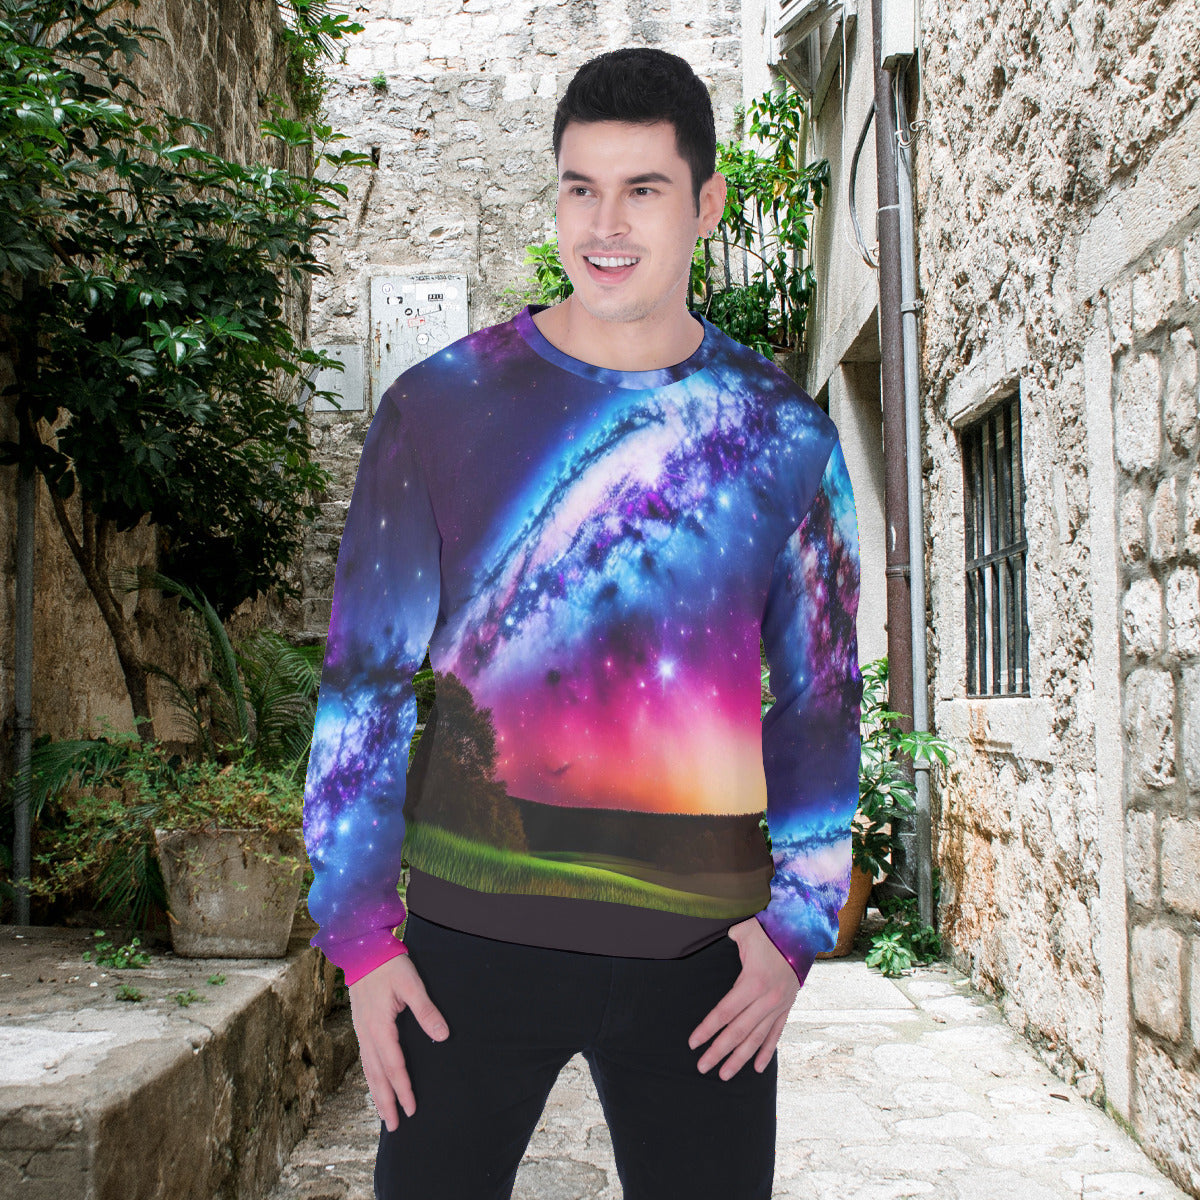 Starry Skies Nightly Sunset Rush Men's Fashion Heavy Fleece Sweatshirt - The Nebula Palace